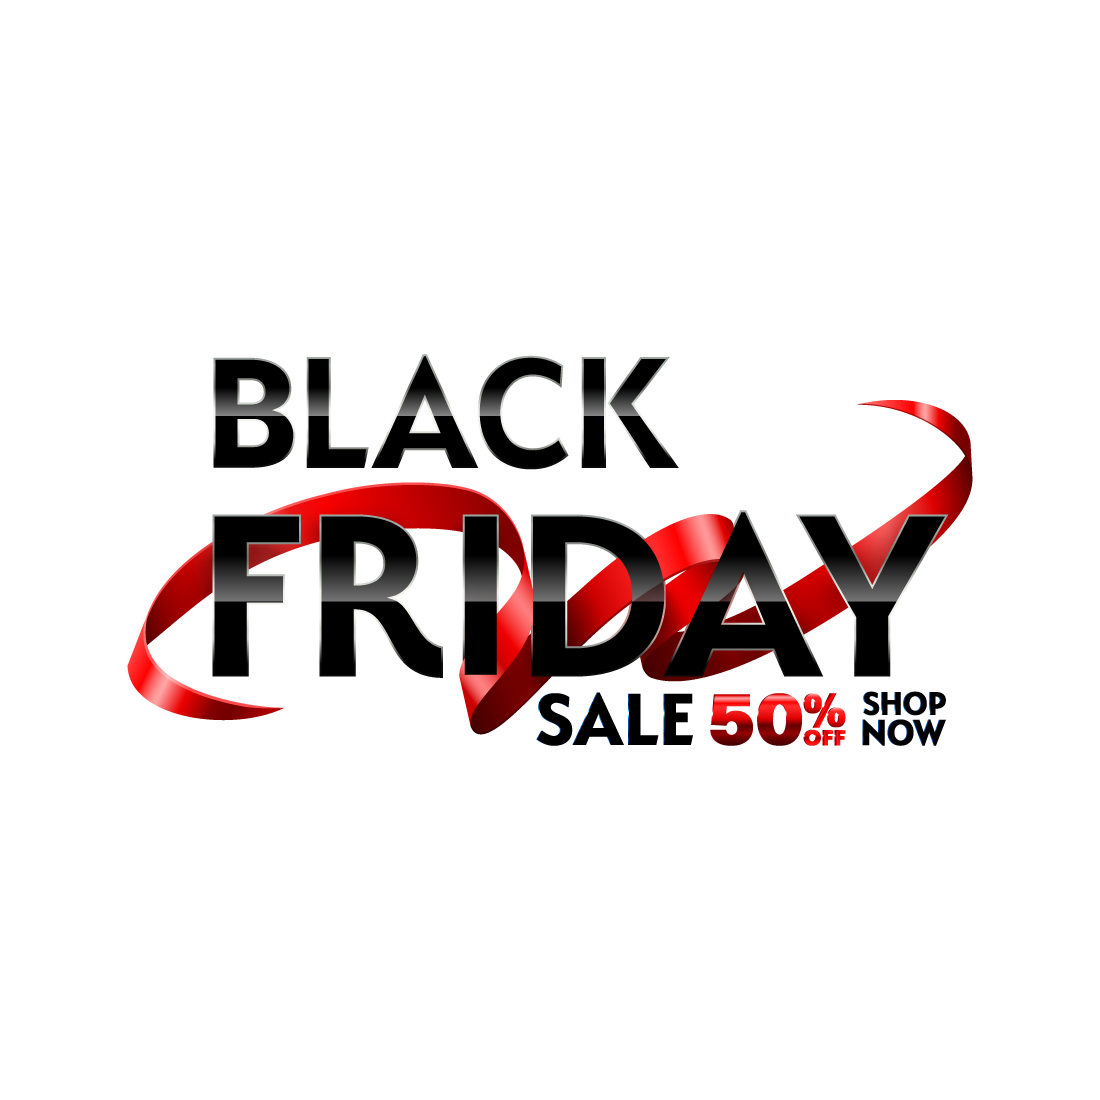 Black Friday Sale Banner – Best Black Friday Banner Ideas cover image.